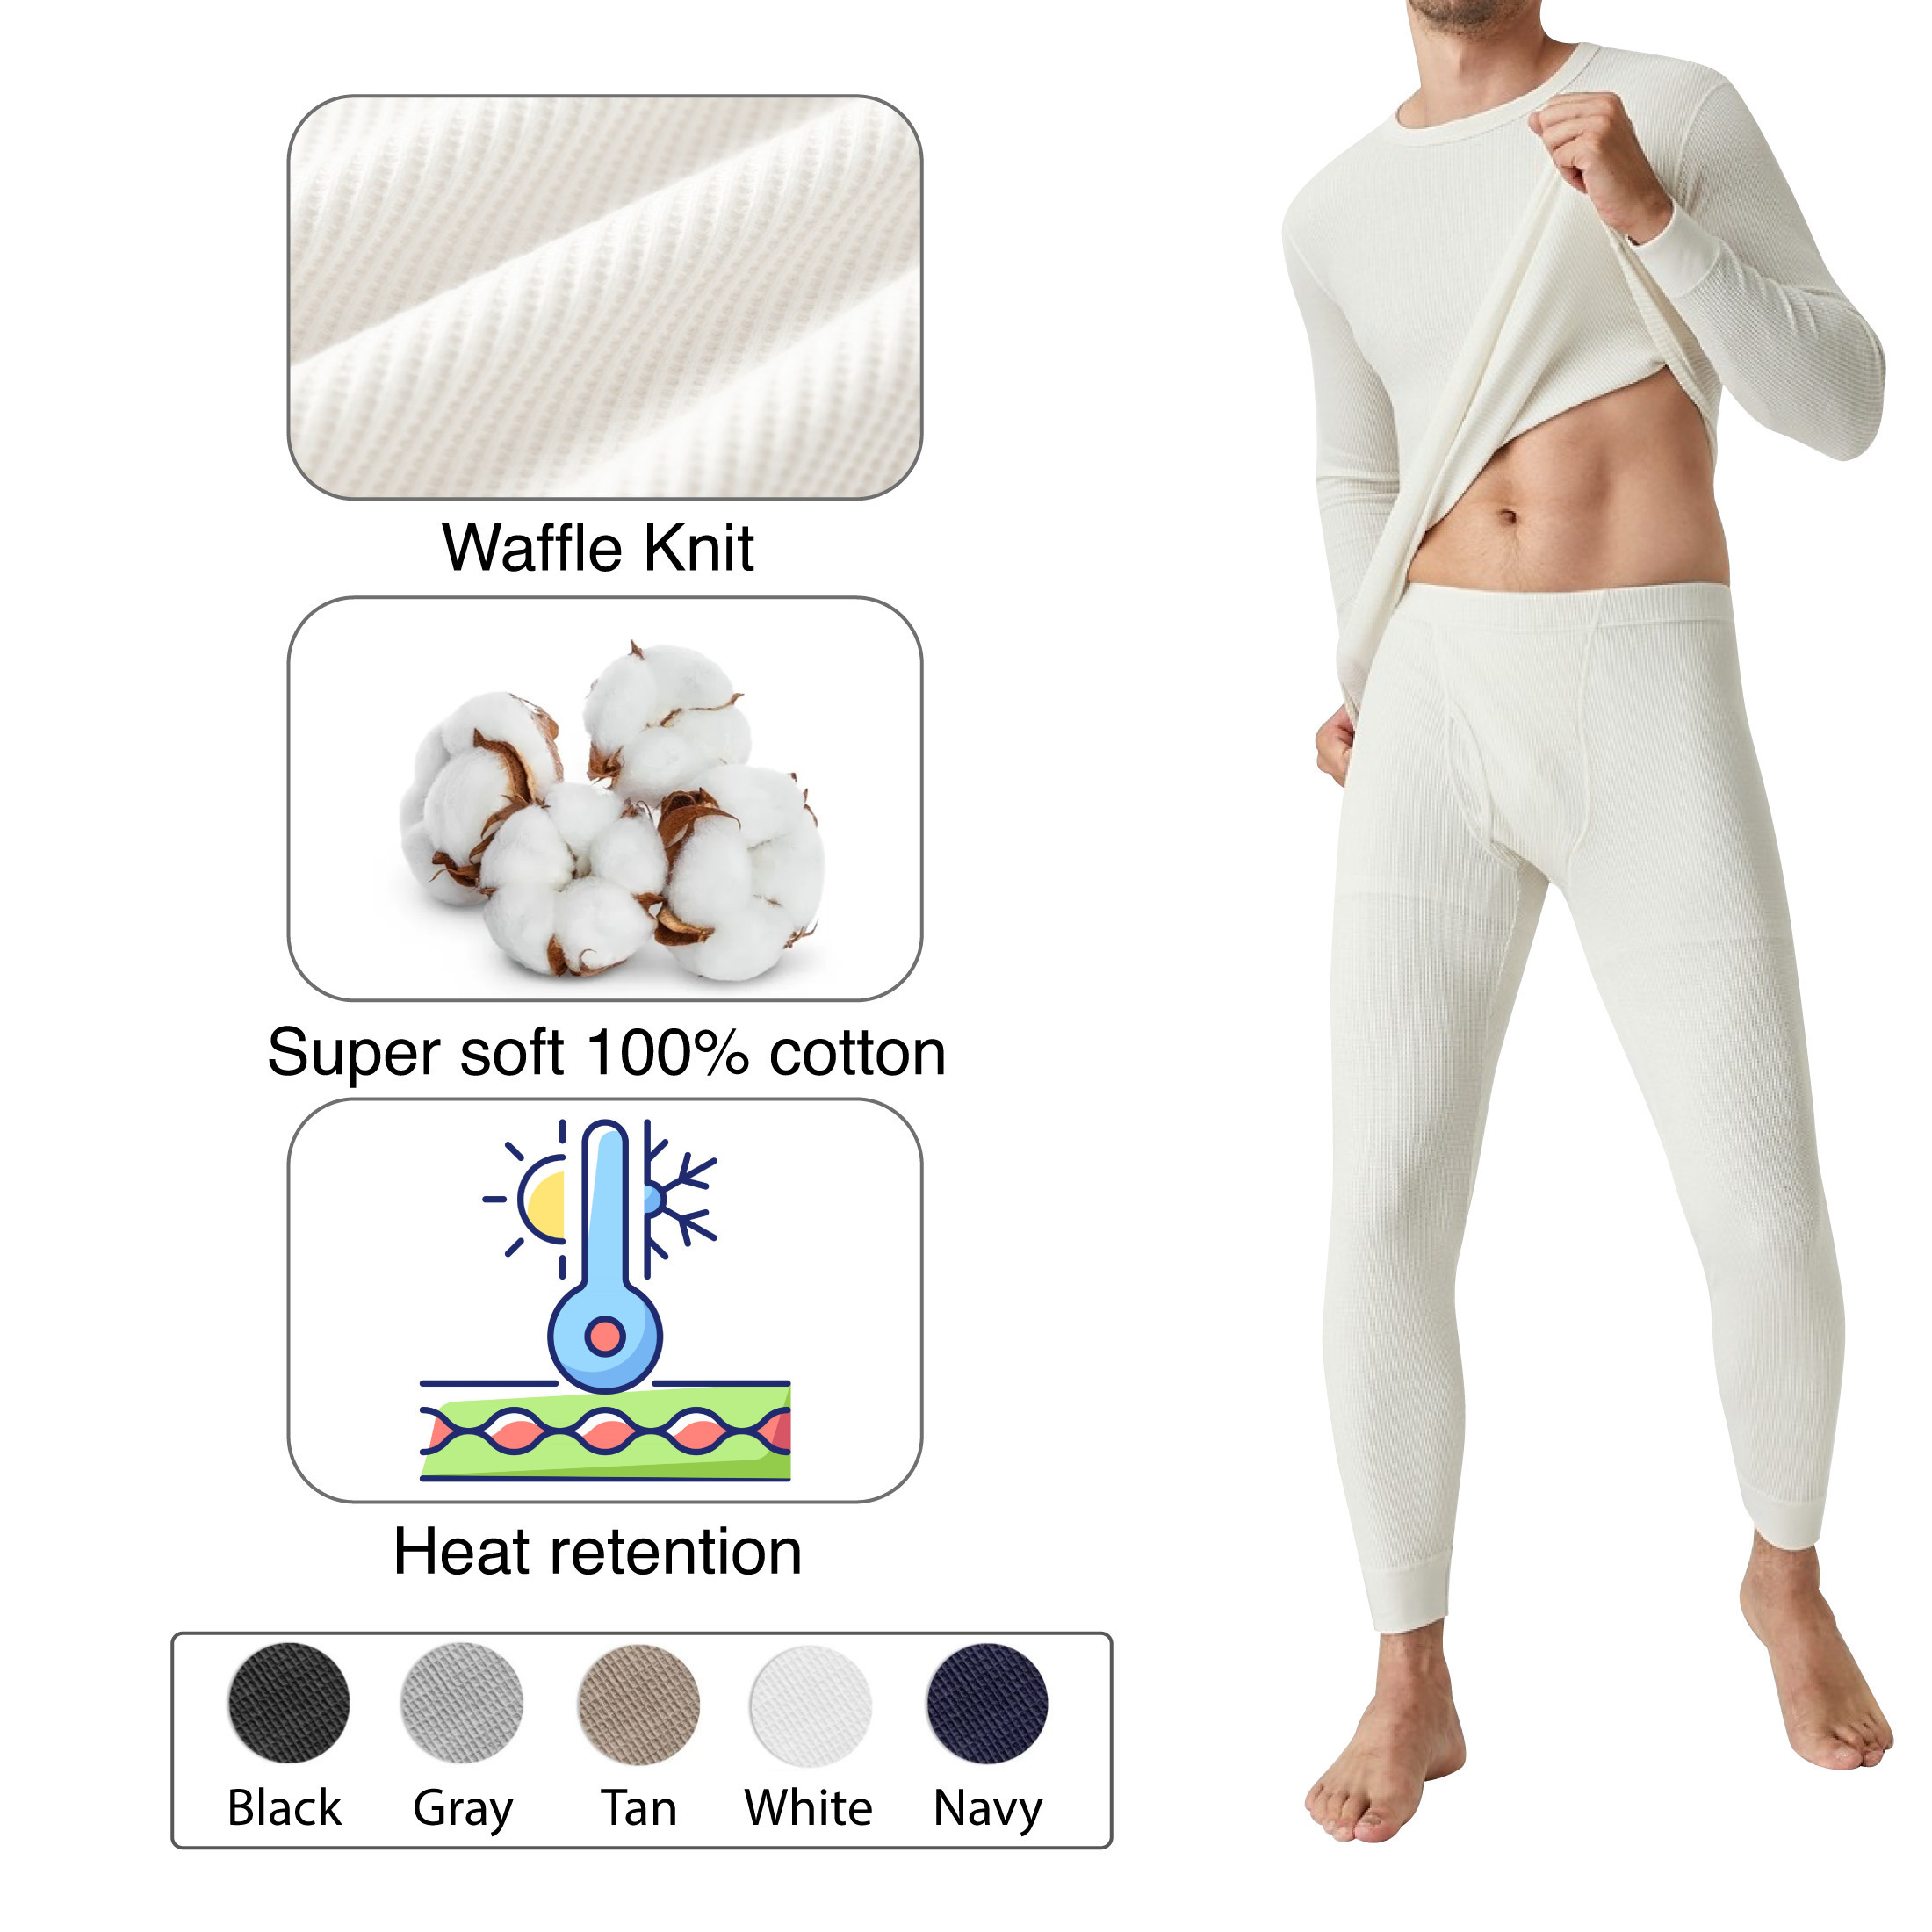 2-Piece: Men's Super Soft Cotton Waffle Knit Winter Thermal Underwear Set - Navy, Large